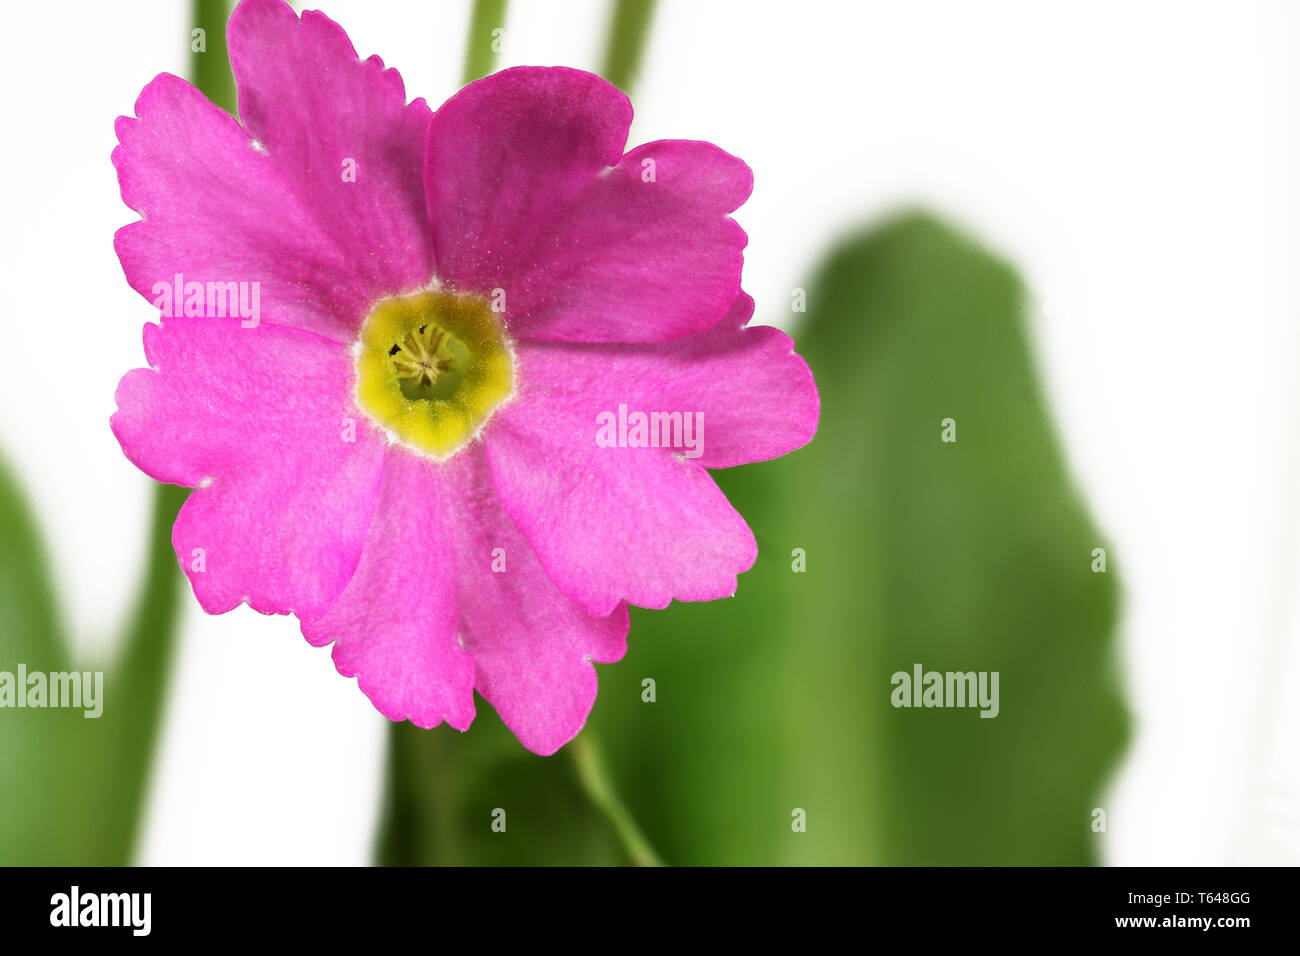 marsh primrose or moonlight primerose [Primula alpicola] Stock Photo